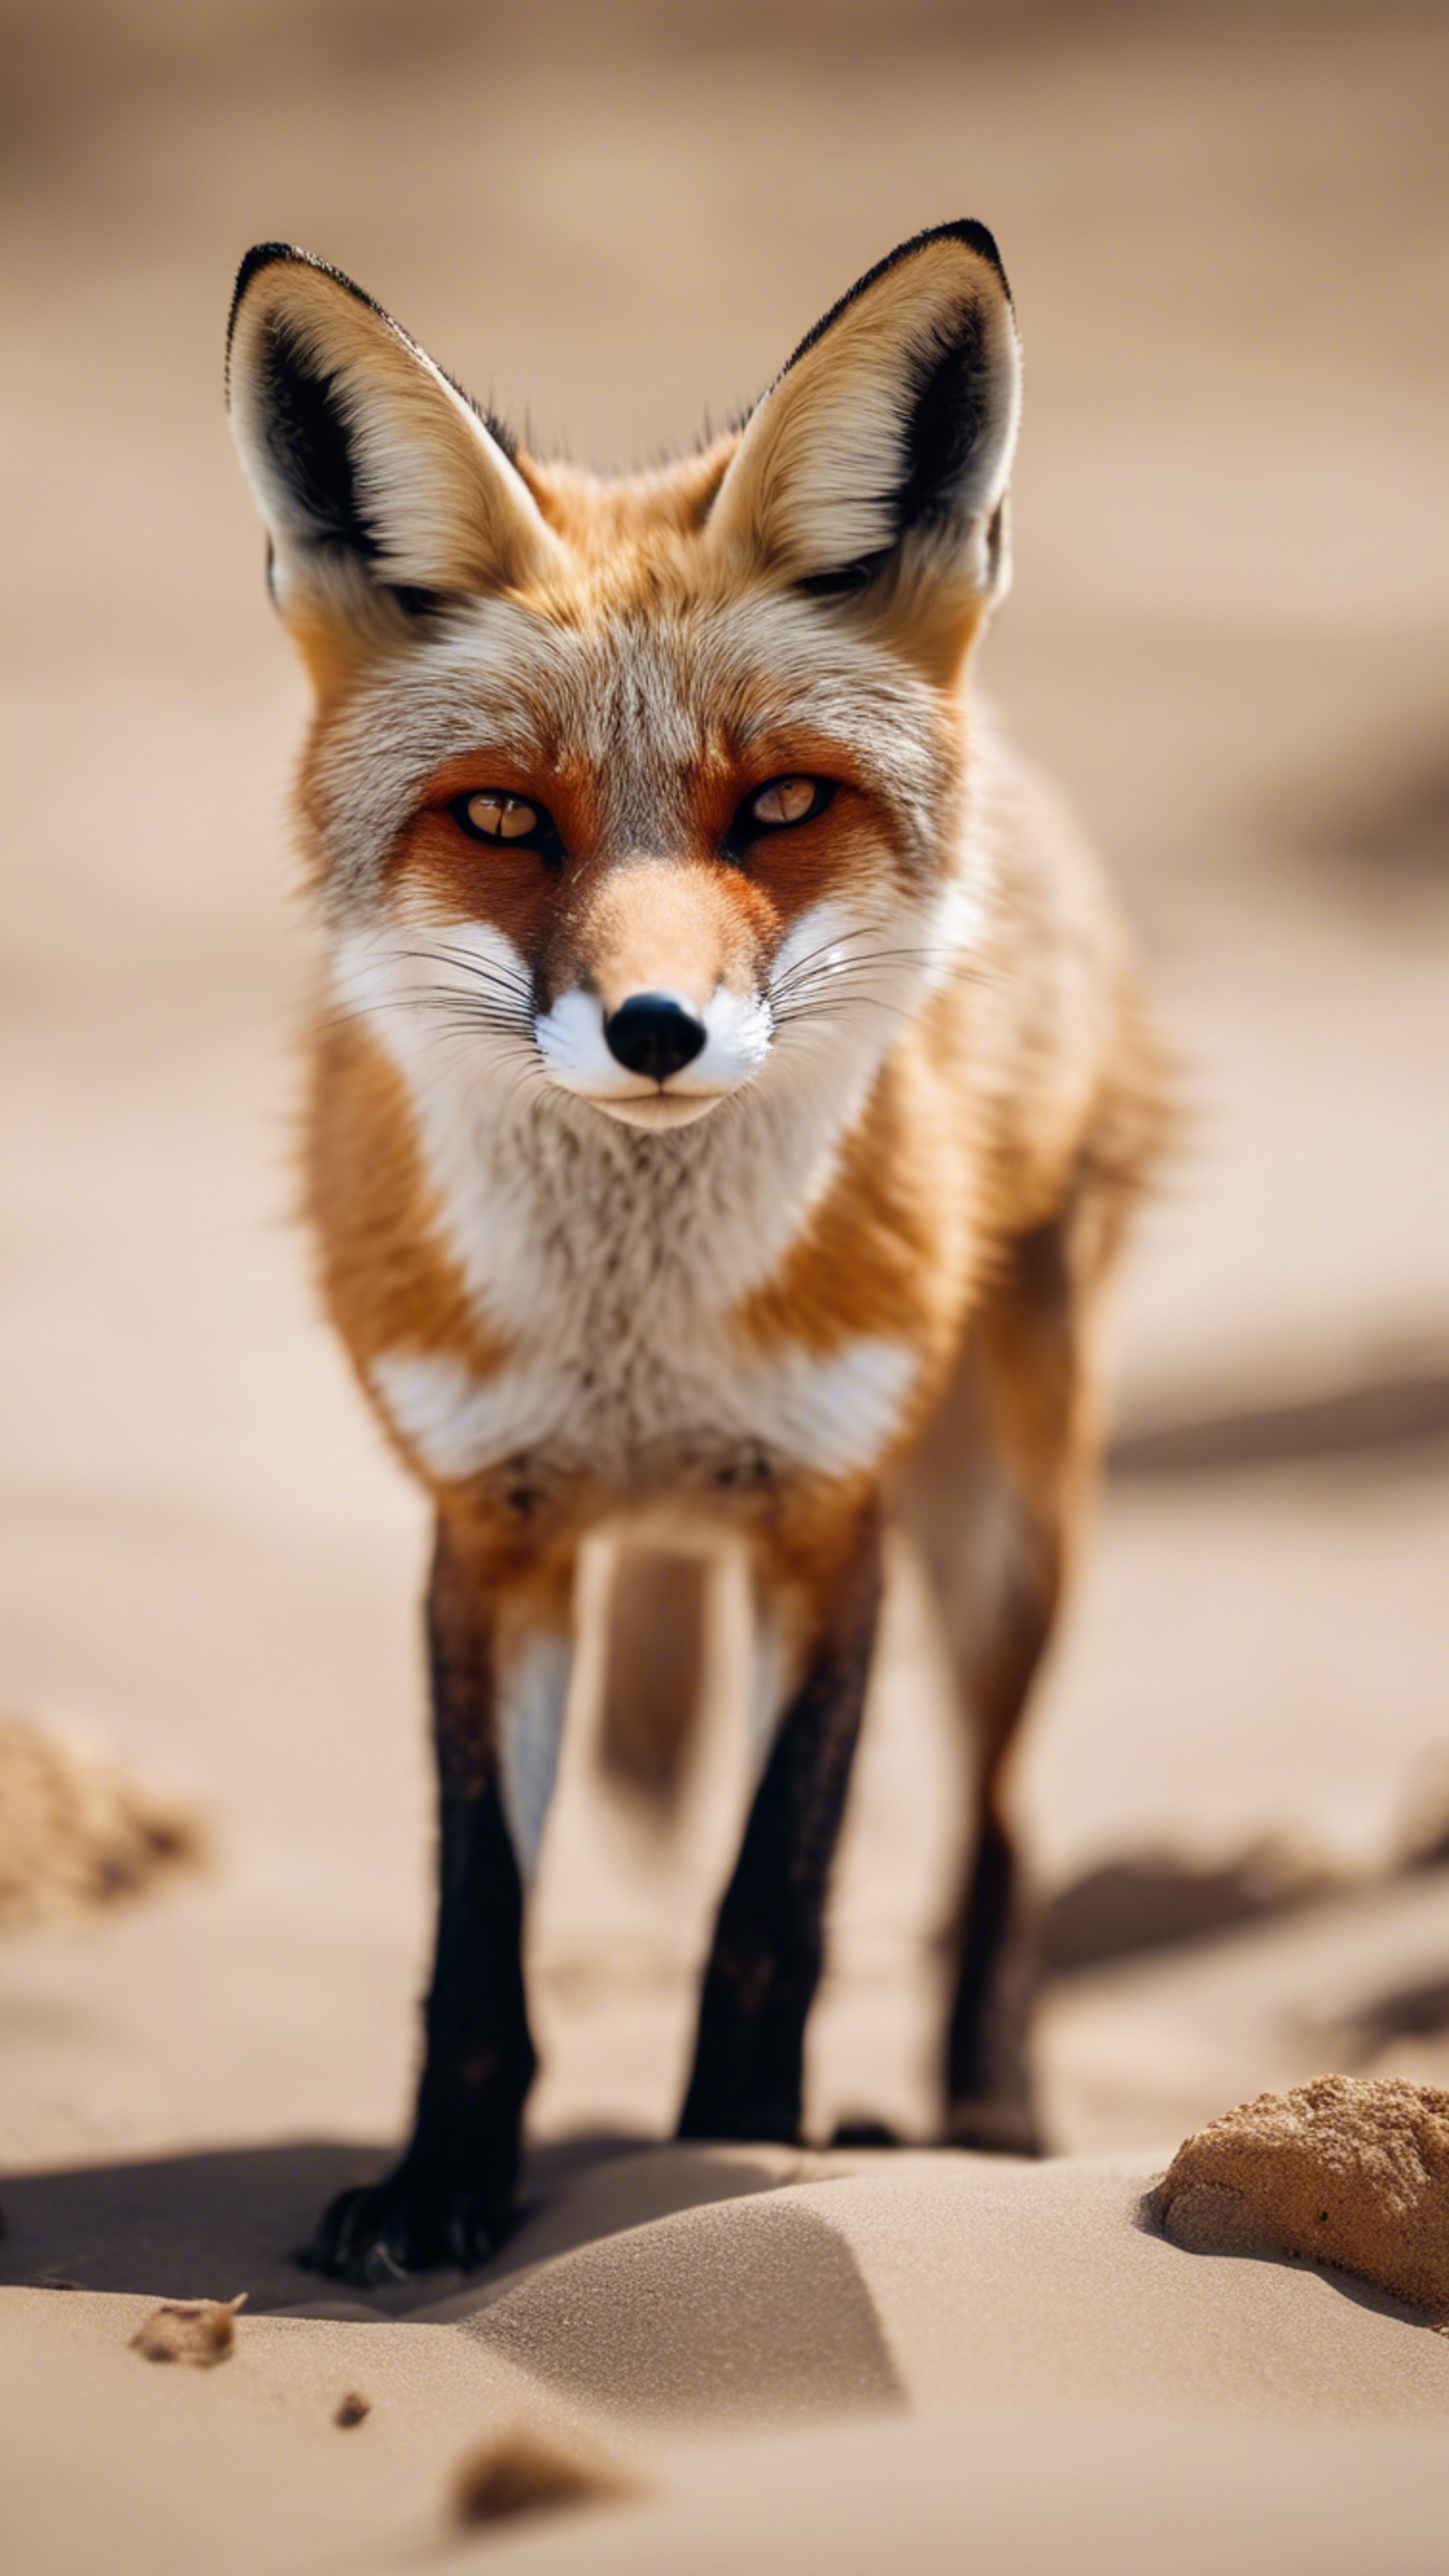 A lone desert fox in its natural habitat, roaming around amid the sand dunes. Wallpaper[17bb71b2b2bc40f18dca]